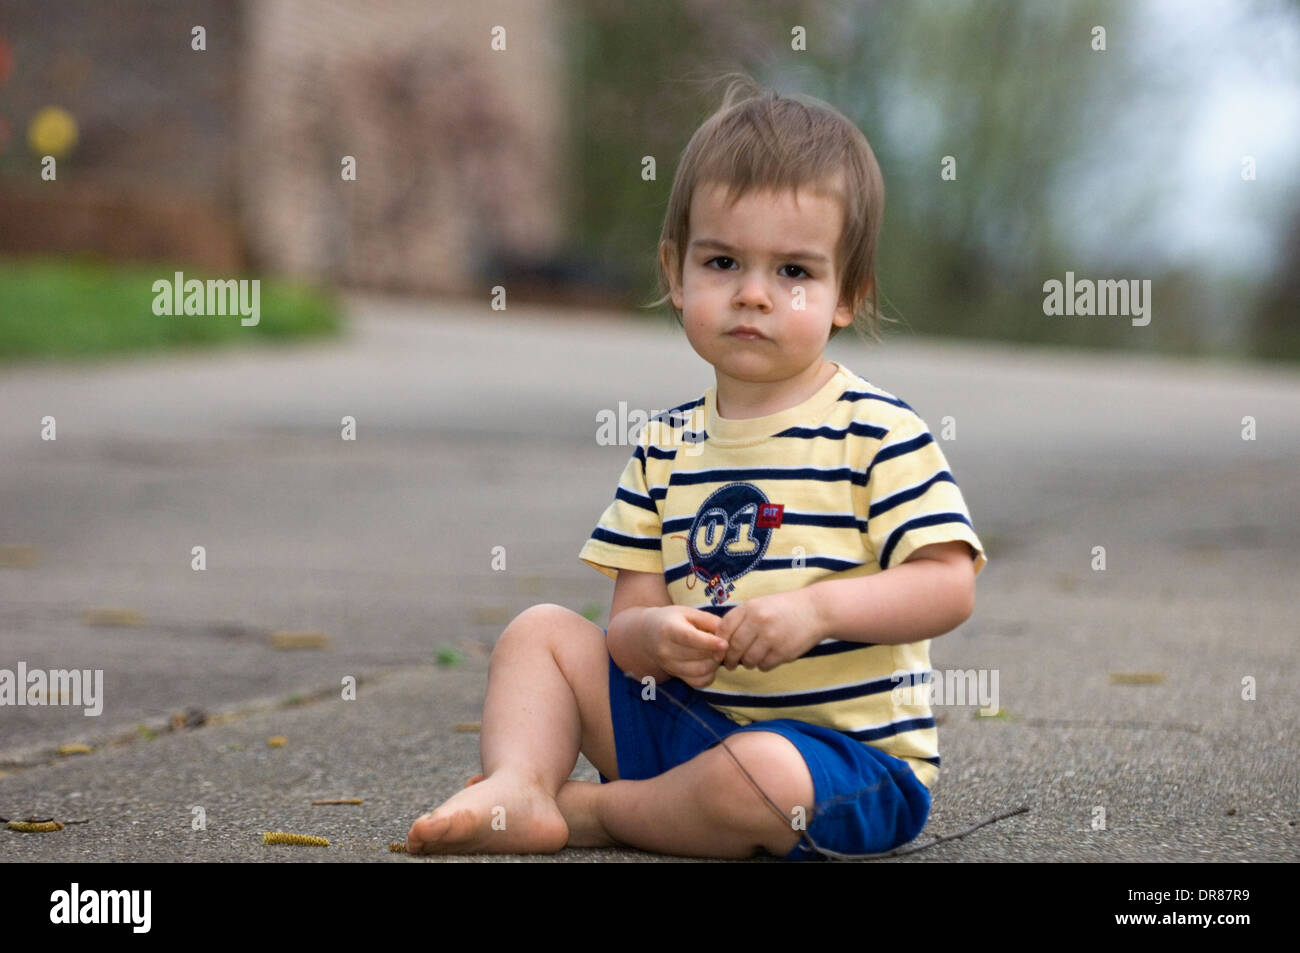 Bambino seduto sul cemento carraio giocando Foto Stock